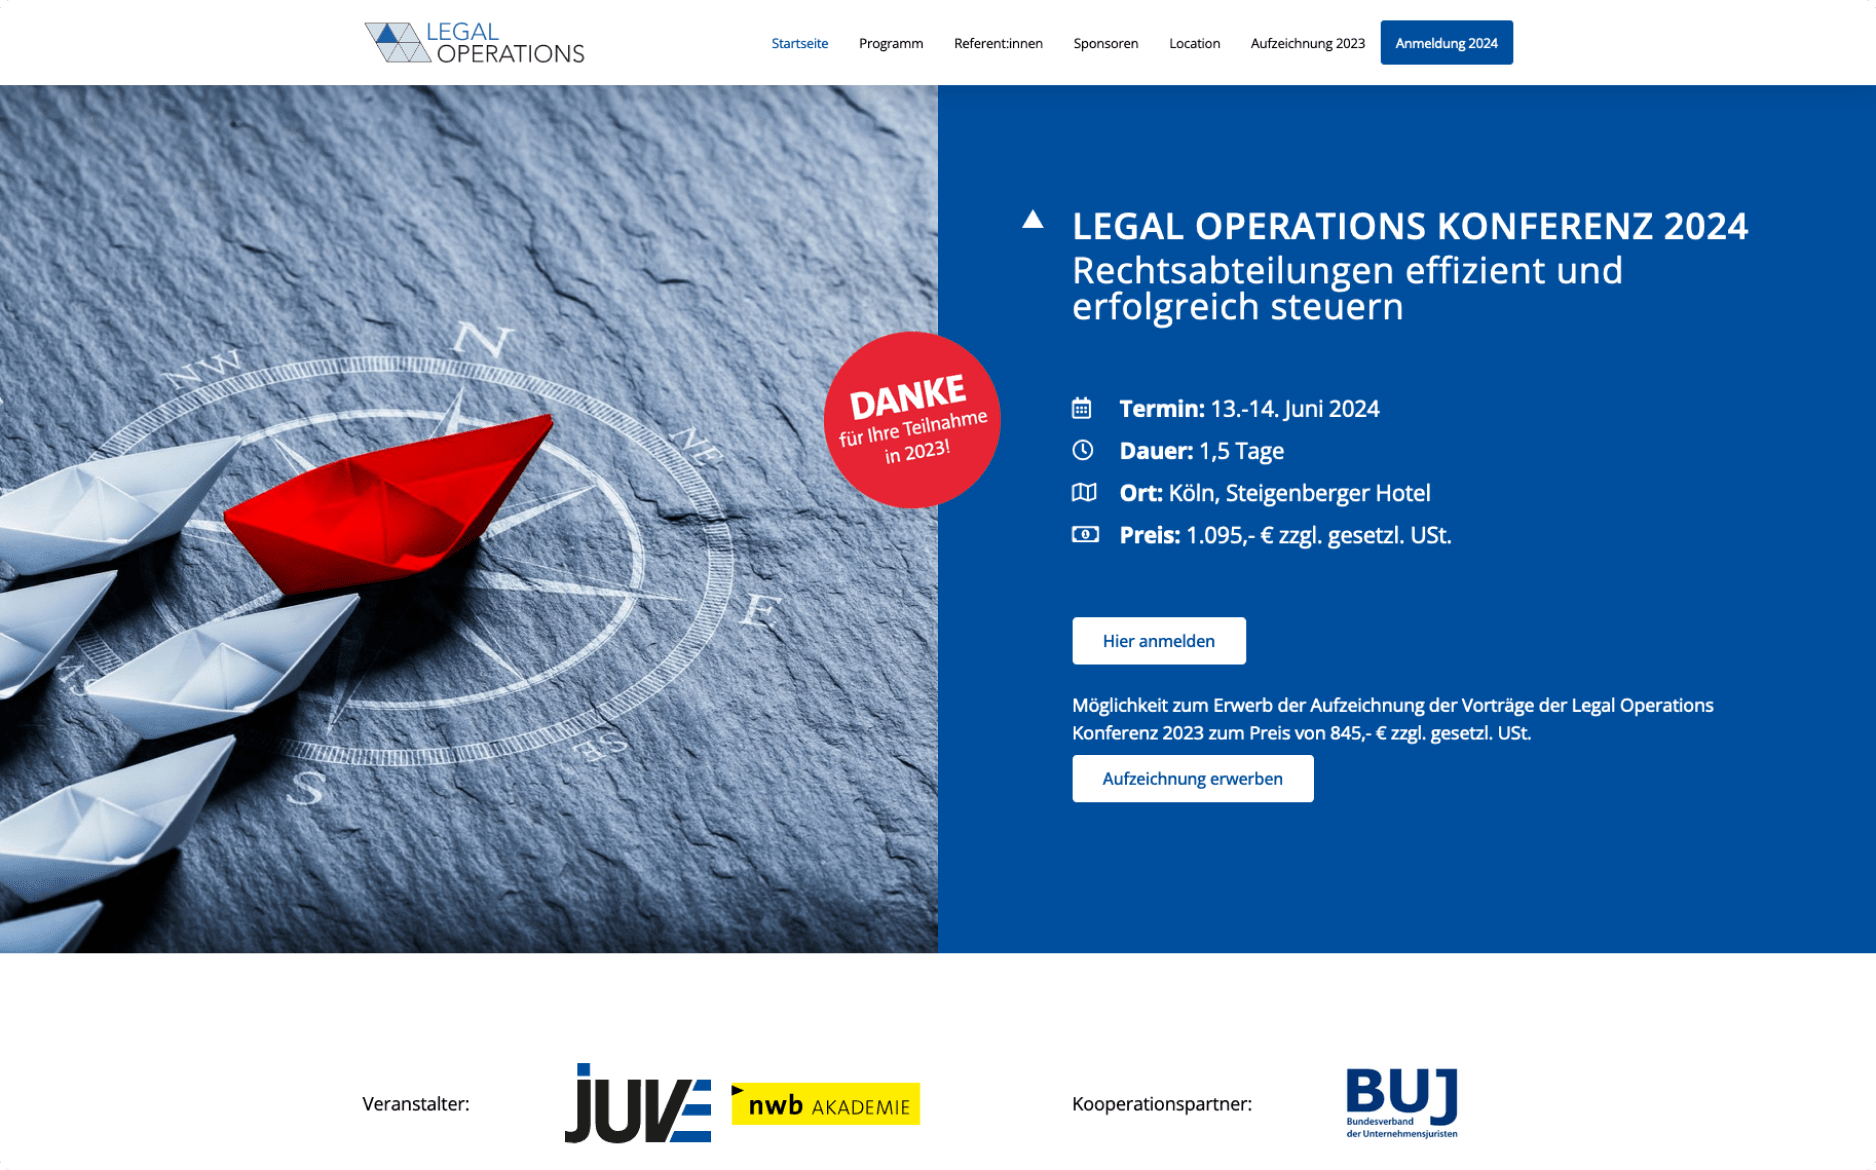 Landingpage "Legal Operations Konferenz 2024"